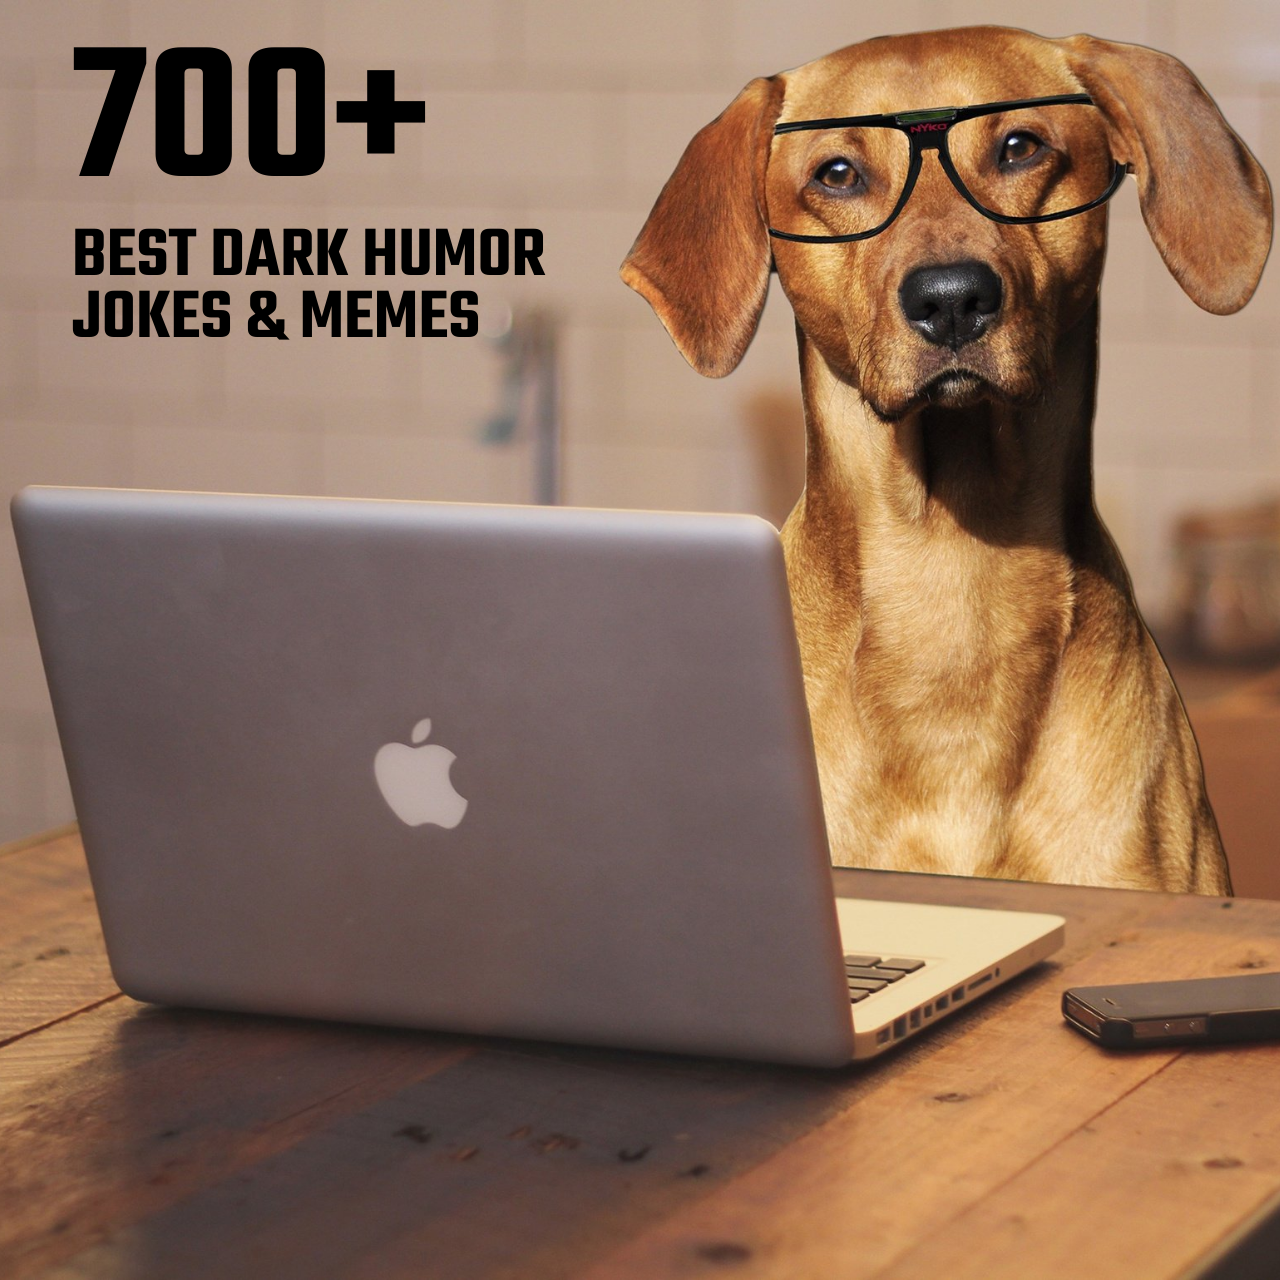 700+ Best Dark Humor Jokes & Memes to make you laugh Hilariously